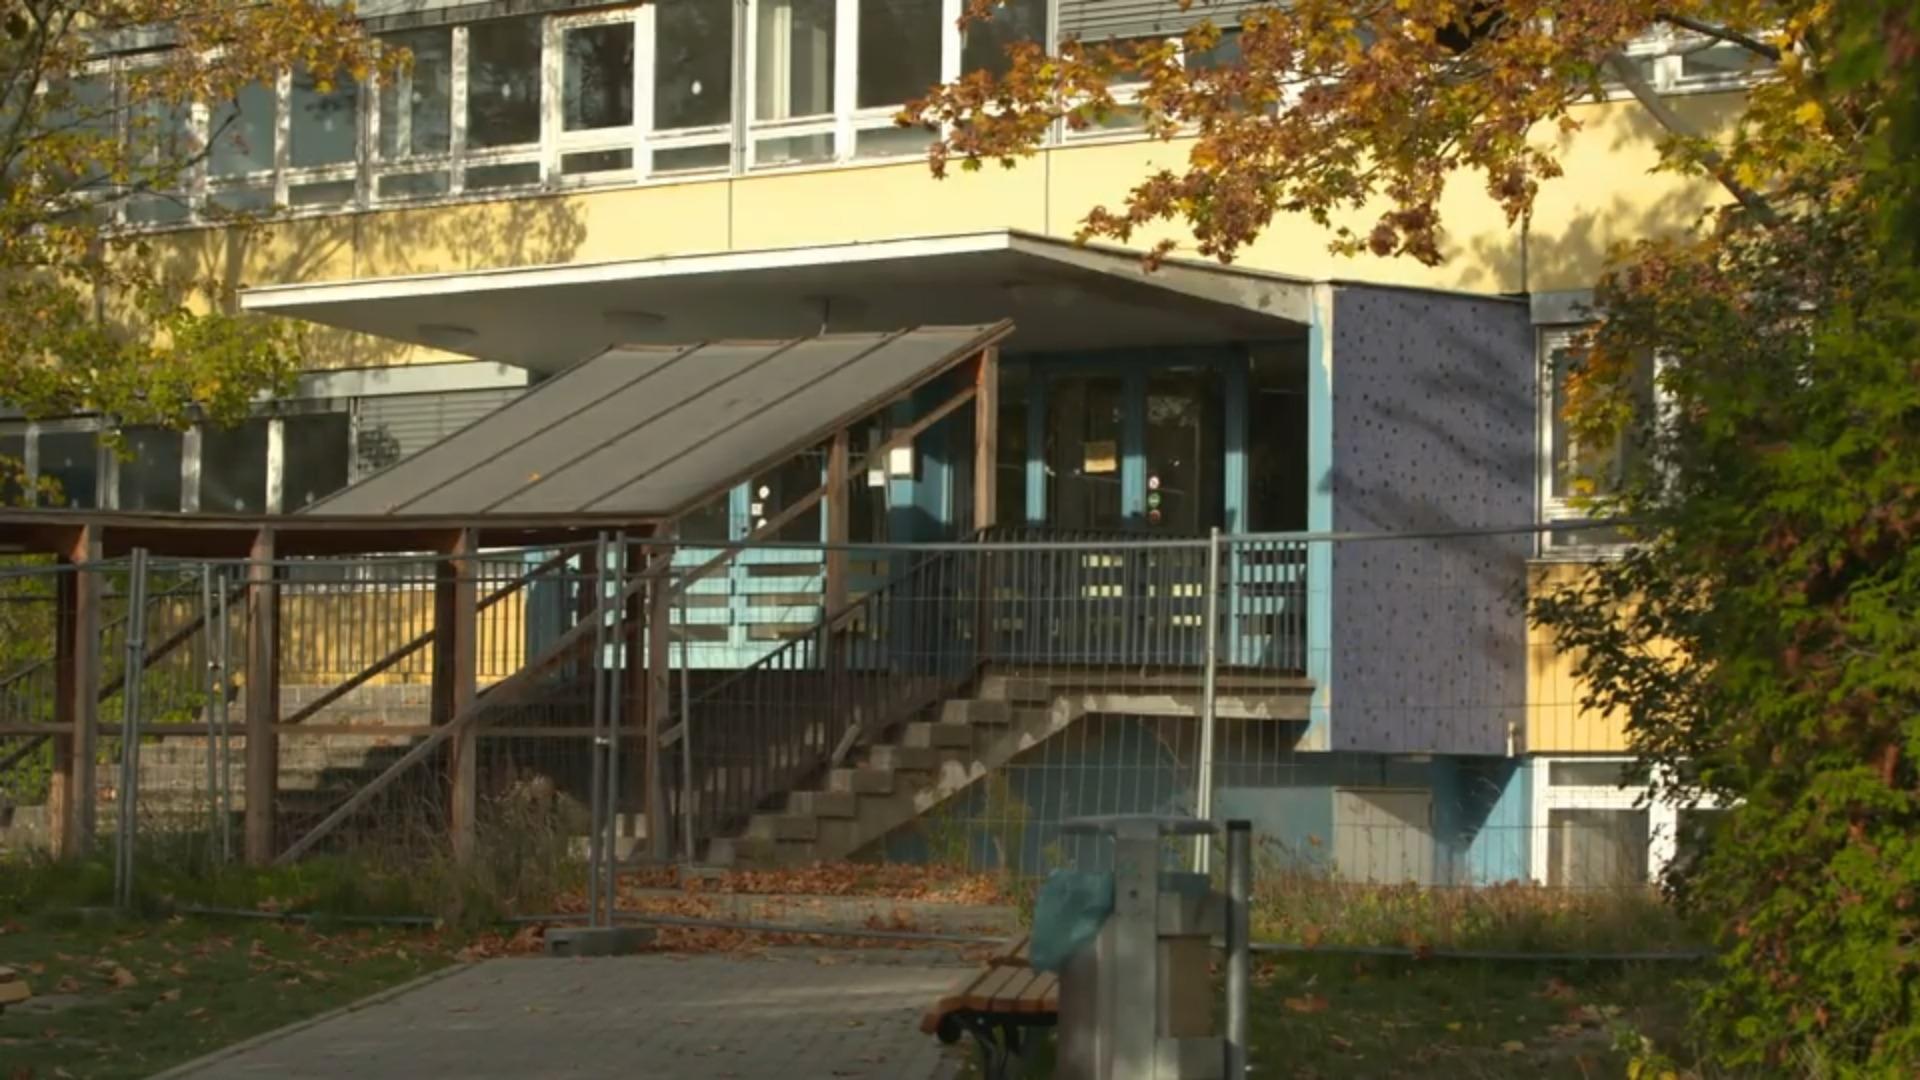 Bruchbuden-Schule in Berlin Reporterin lässt nicht locker